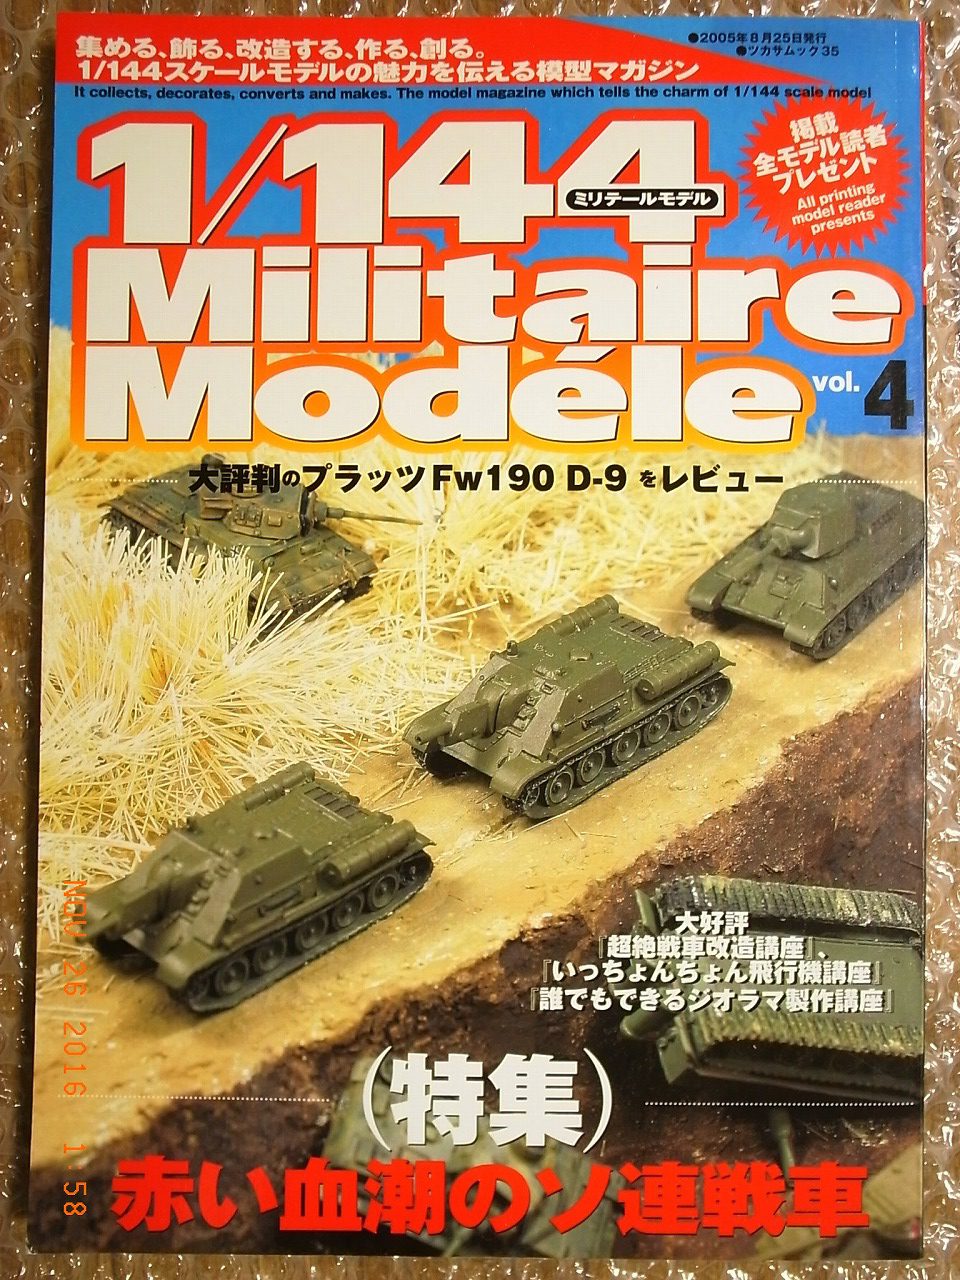 Soviet Tanks 1 144 Scale Military Models Pictorial Book Japan Rarebooksjapan Com